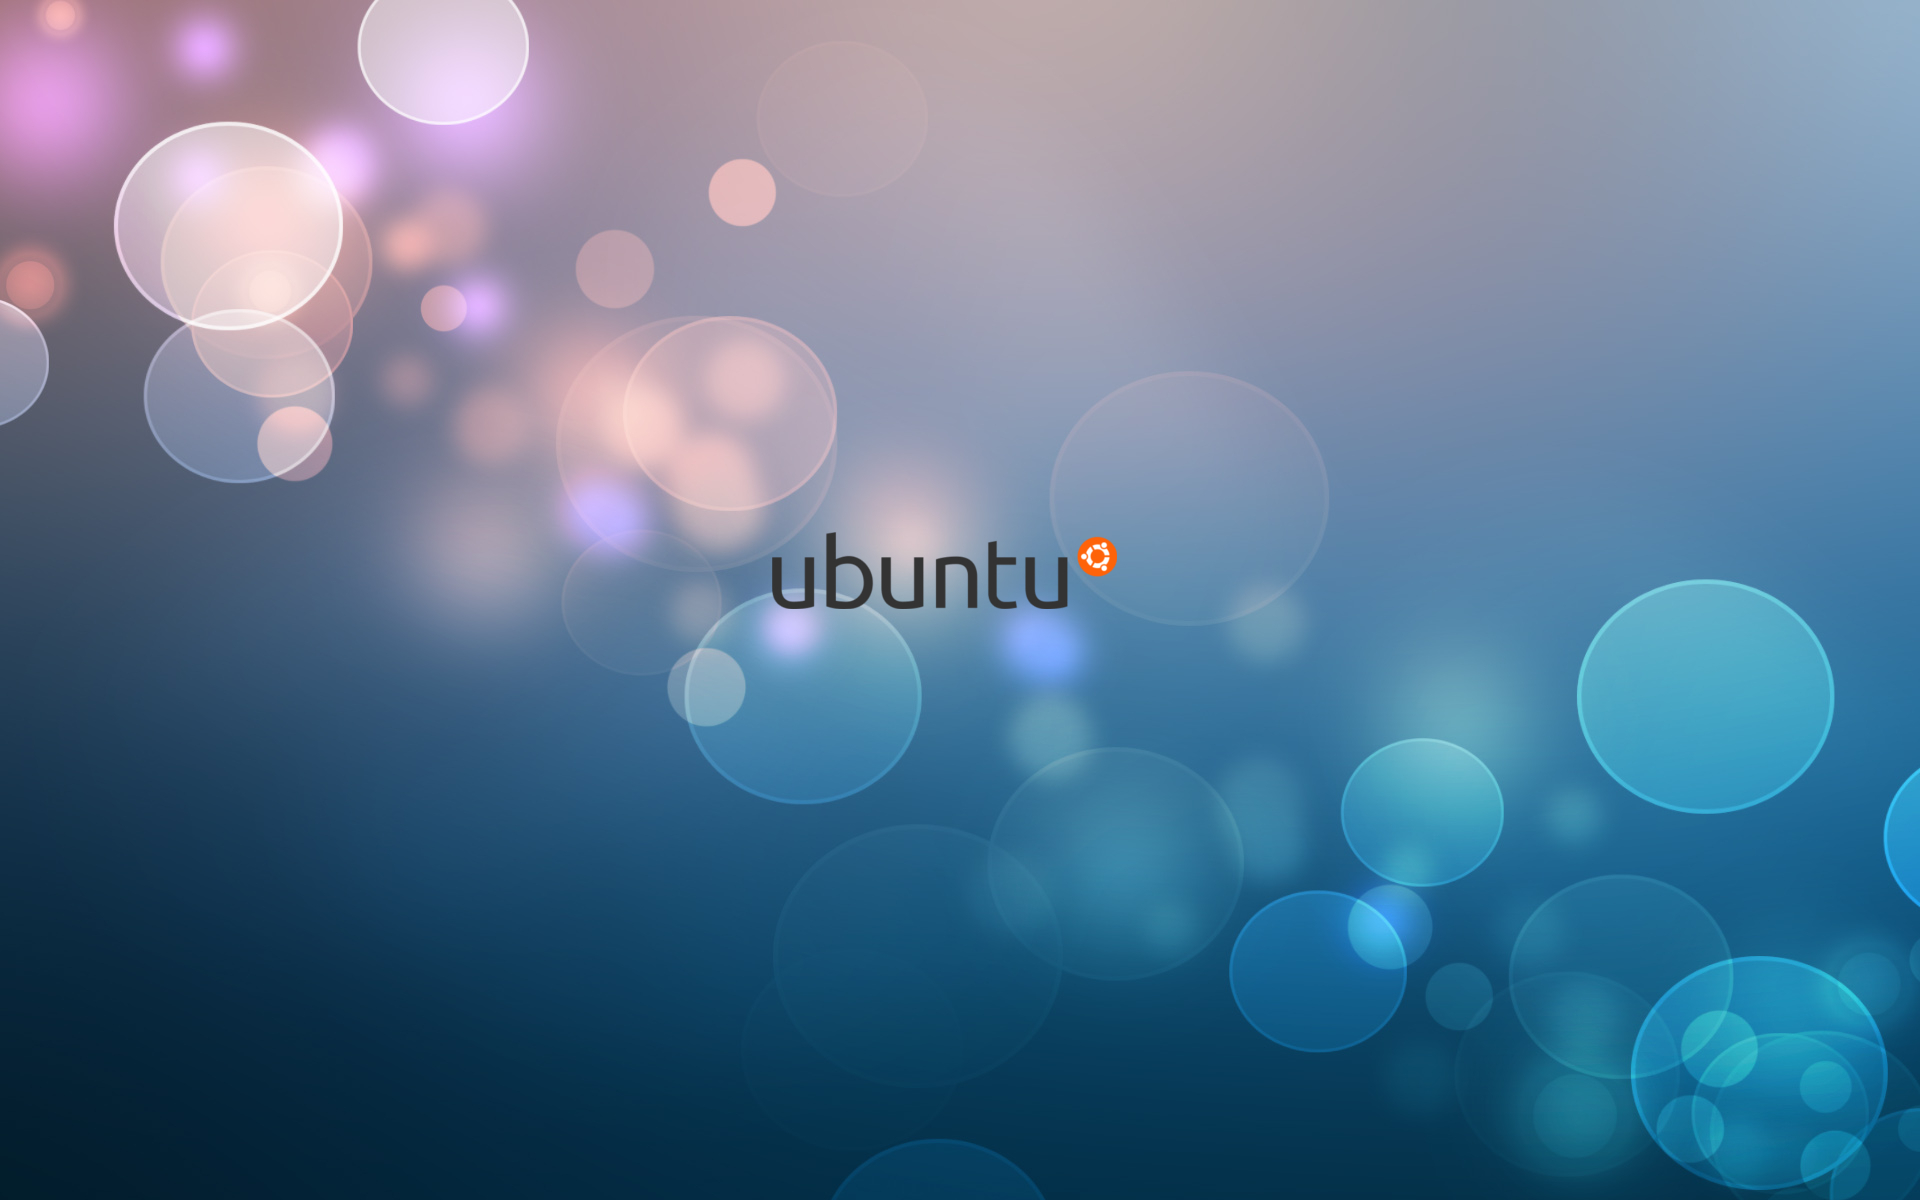 ubuntu wallpaper download,blue,sky,light,turquoise,design